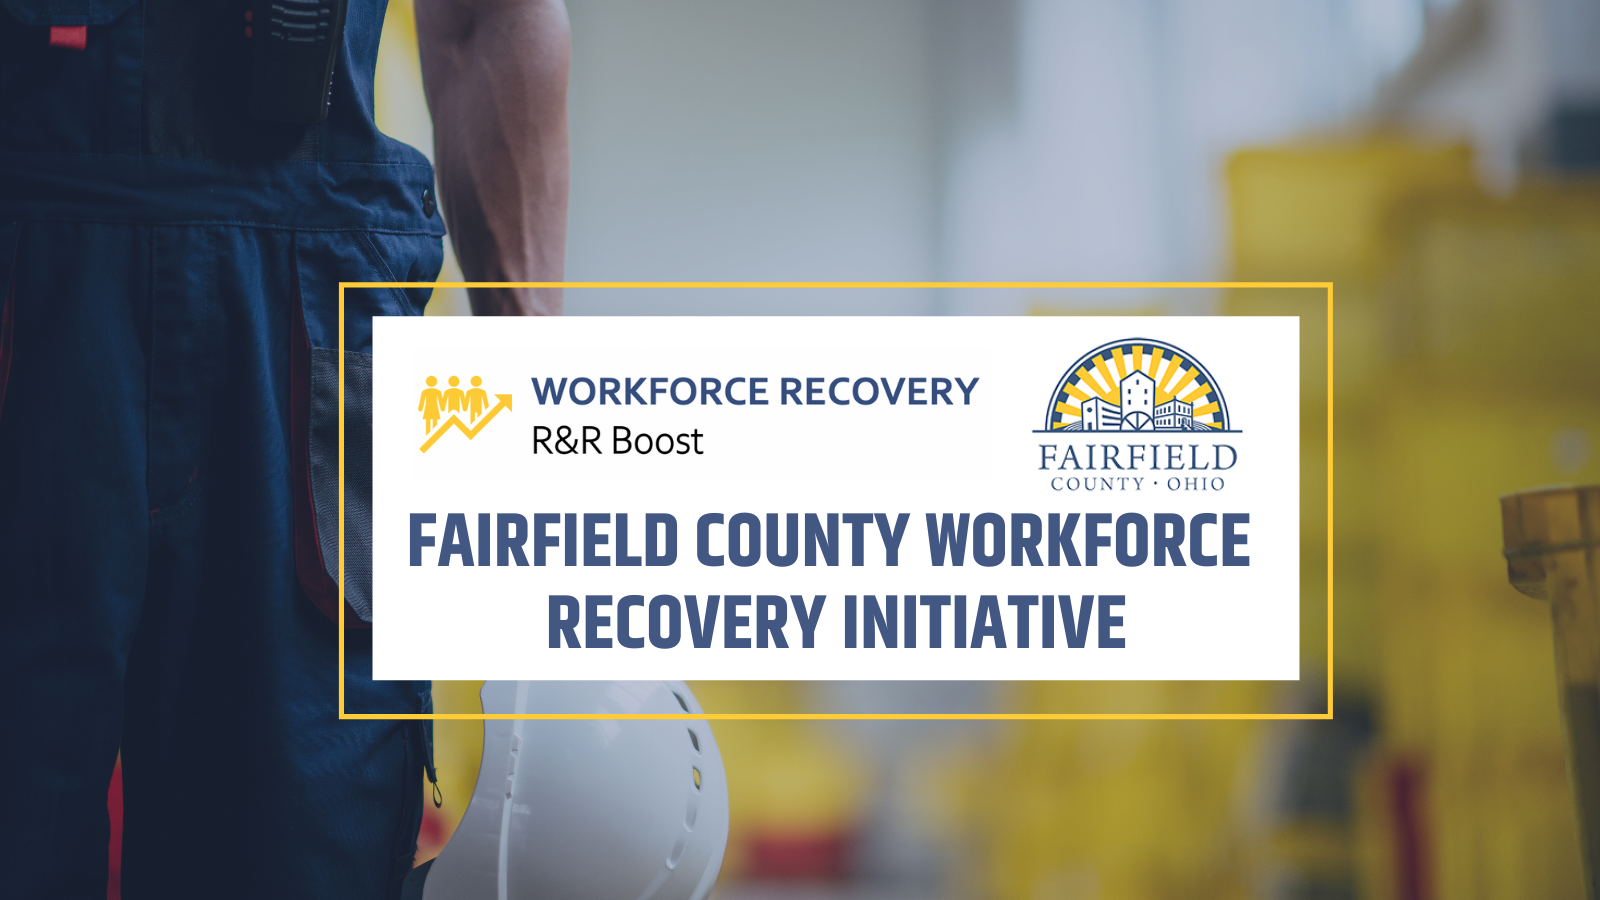 Fairfield County Economic & Workforce Development ad